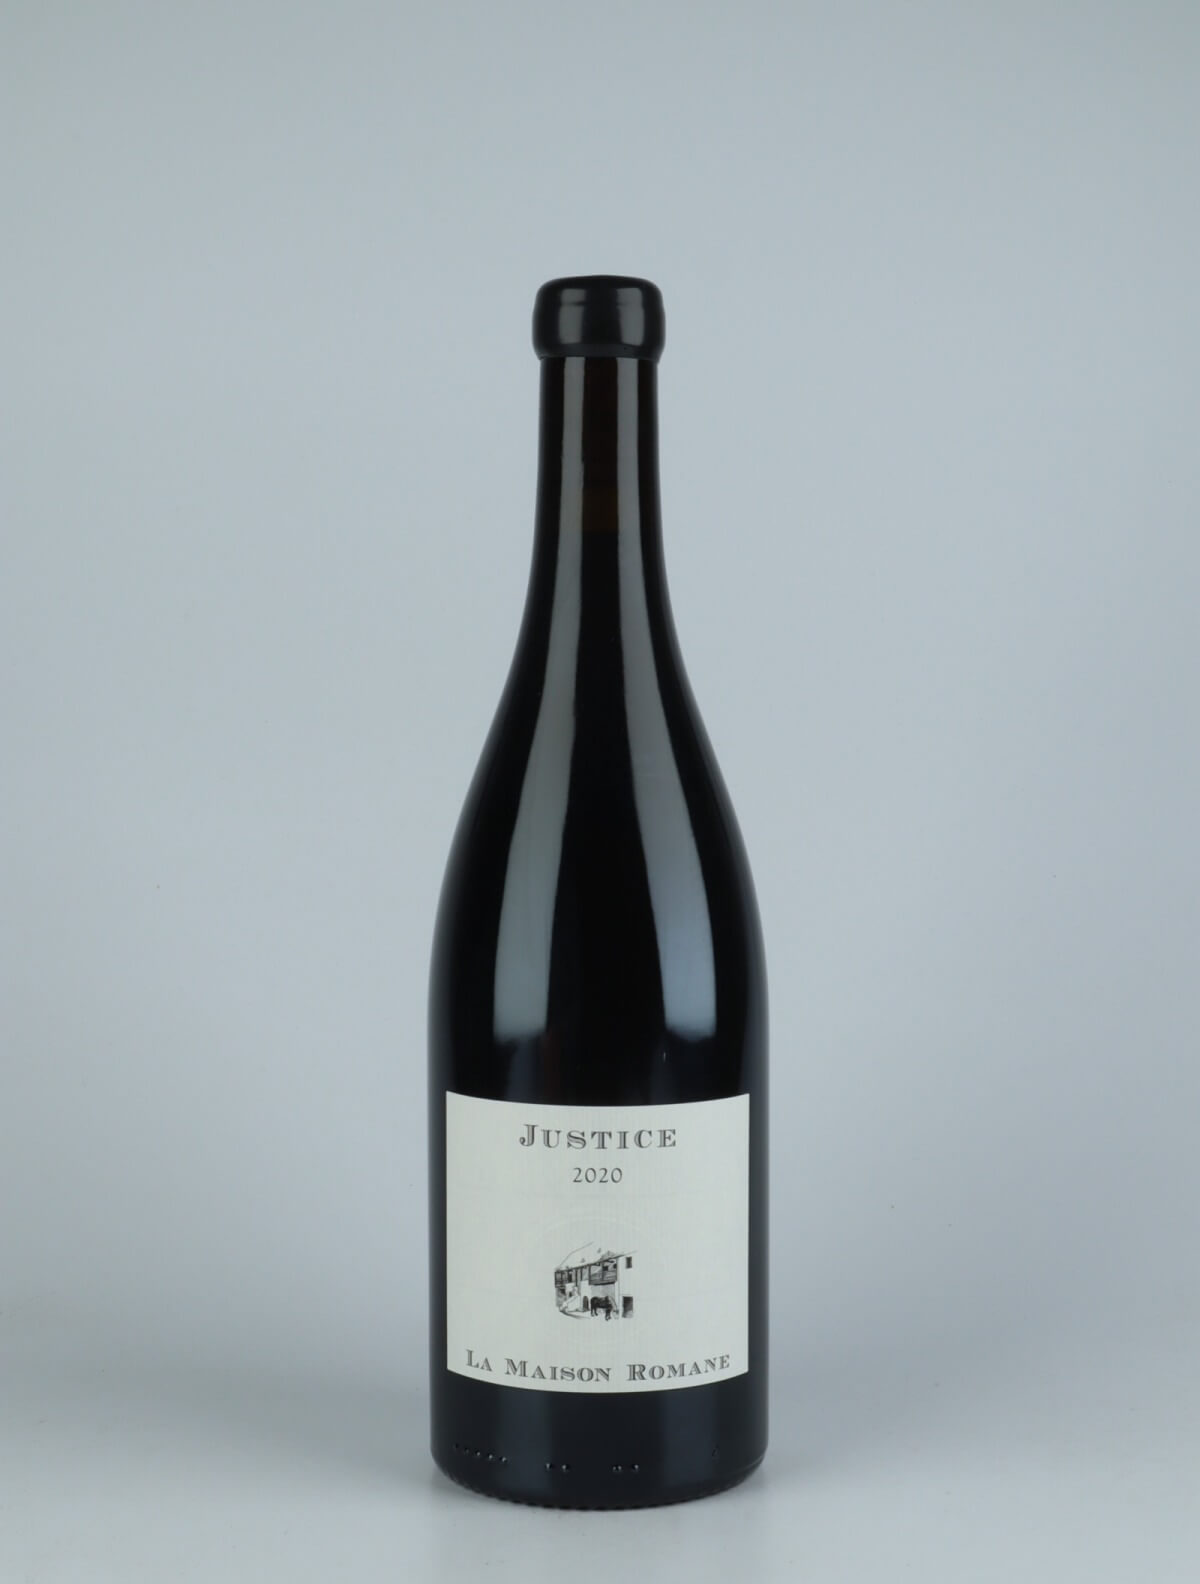 A bottle 2020 Gevrey Chambertin - La Justice Red wine from La Maison Romane, Burgundy in France